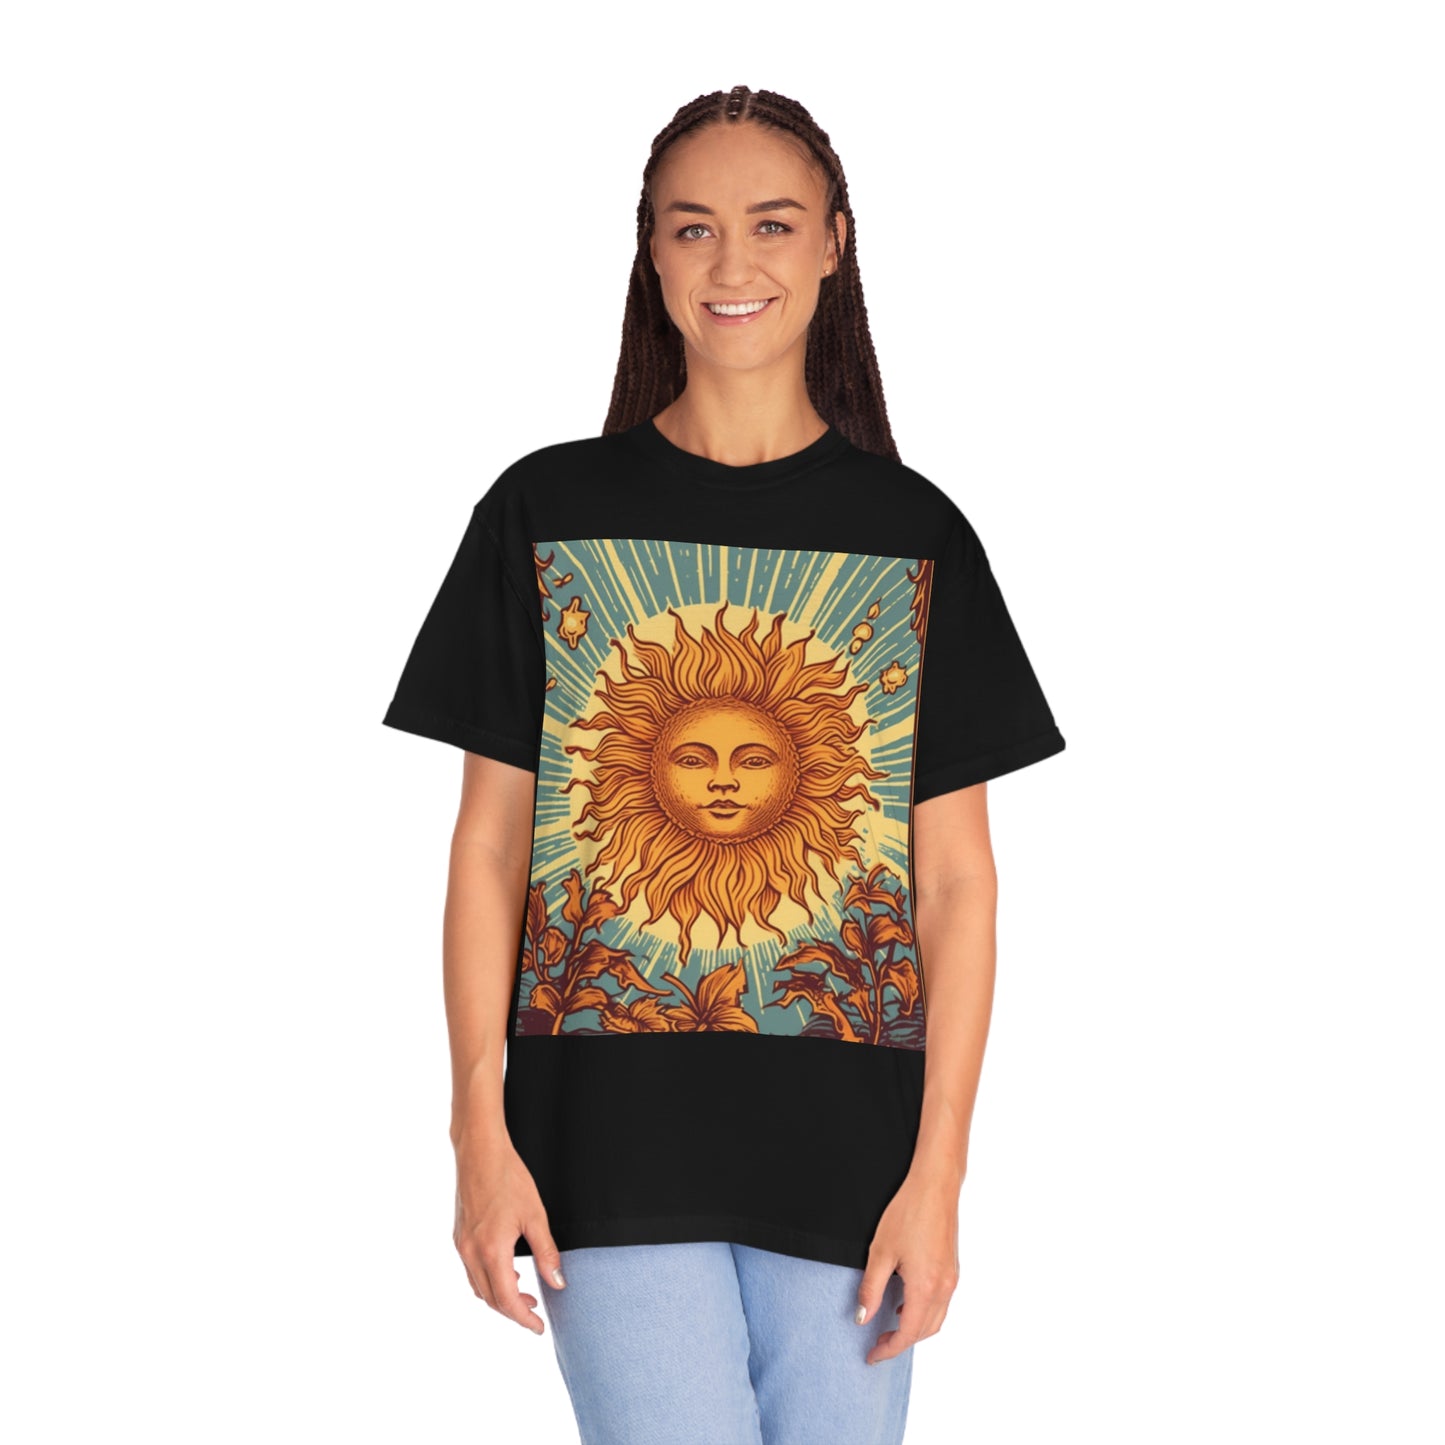 Sun Tarot Card Symbol of Growth, Life, and Radiance - Unisex Garment-Dyed T-shirt